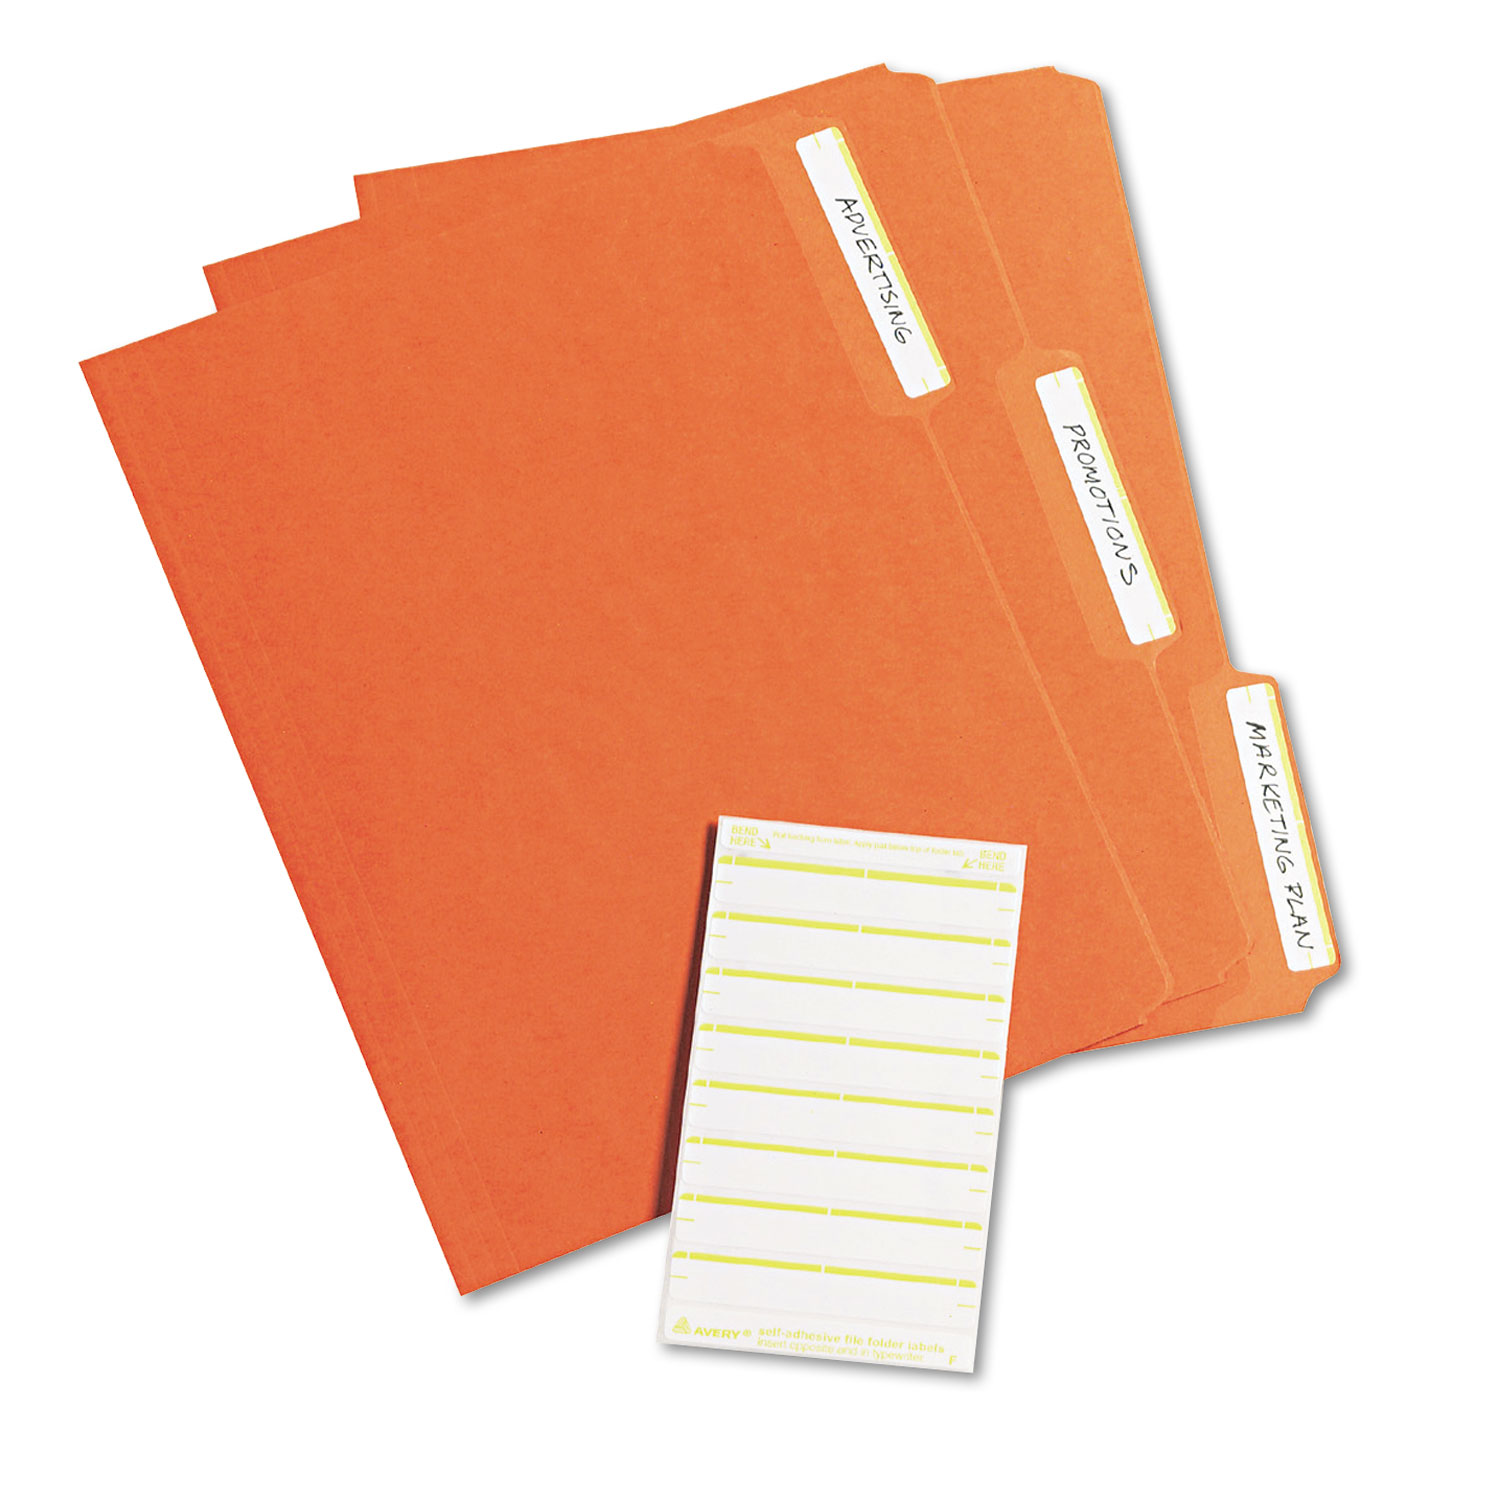 Print or Write File Folder Labels, 11/16 x 3 7/16, White/Yellow Bar, 252/Pack